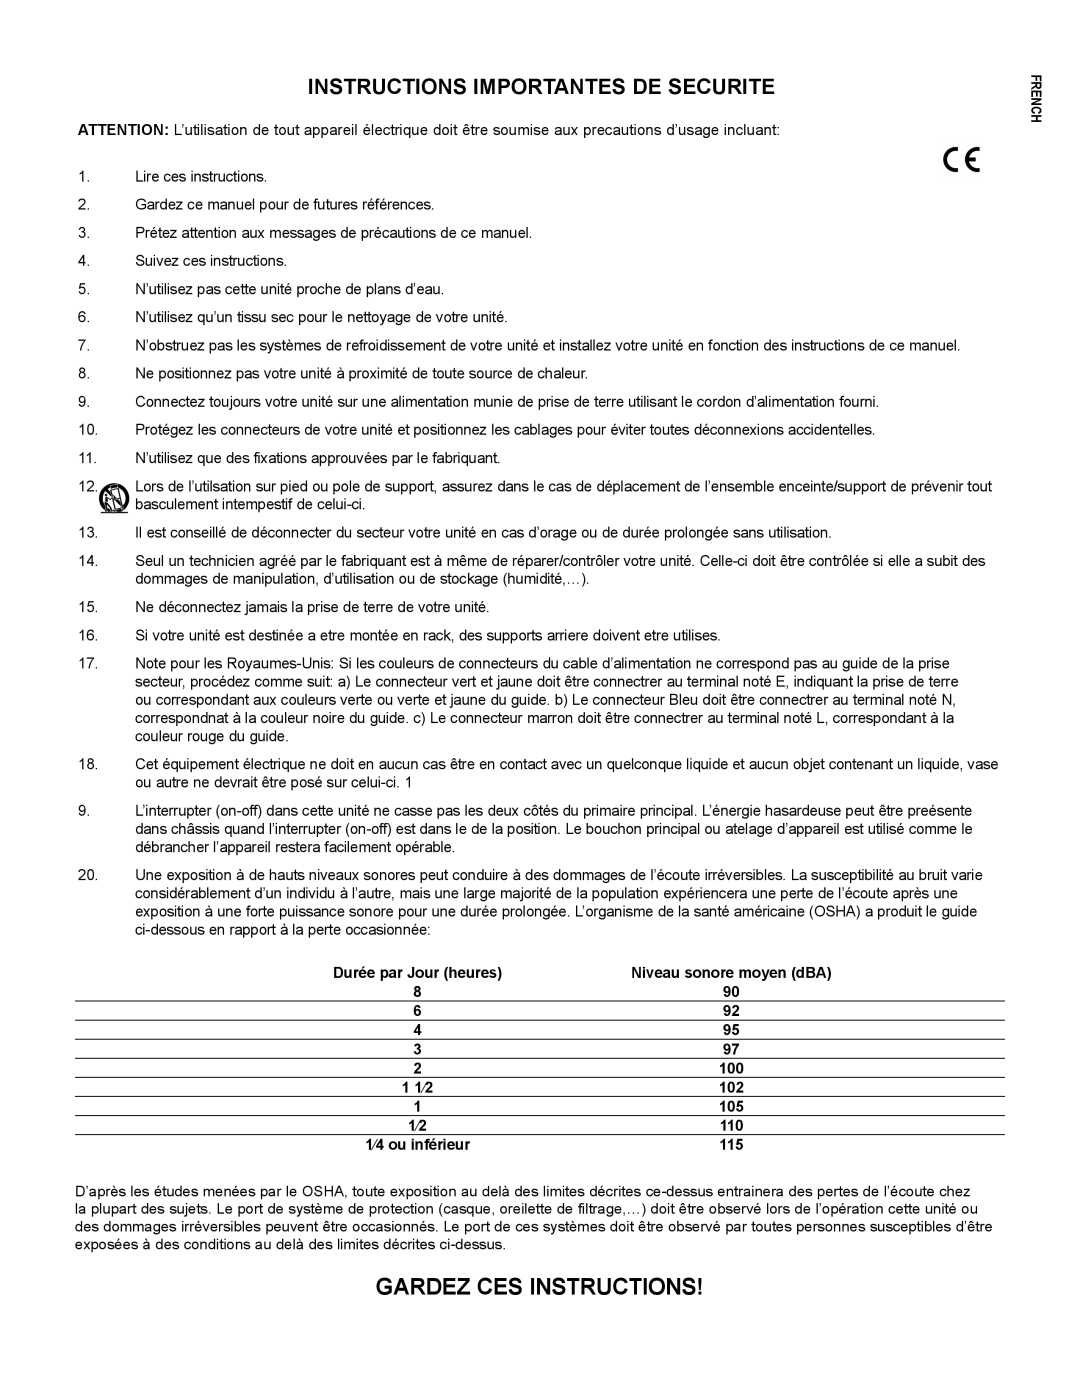 Peavey 35XO manual Gardez Ces Instructions, Instructions Importantes De Securite, Niveau sonore moyen dBA, 1 1⁄2, French 